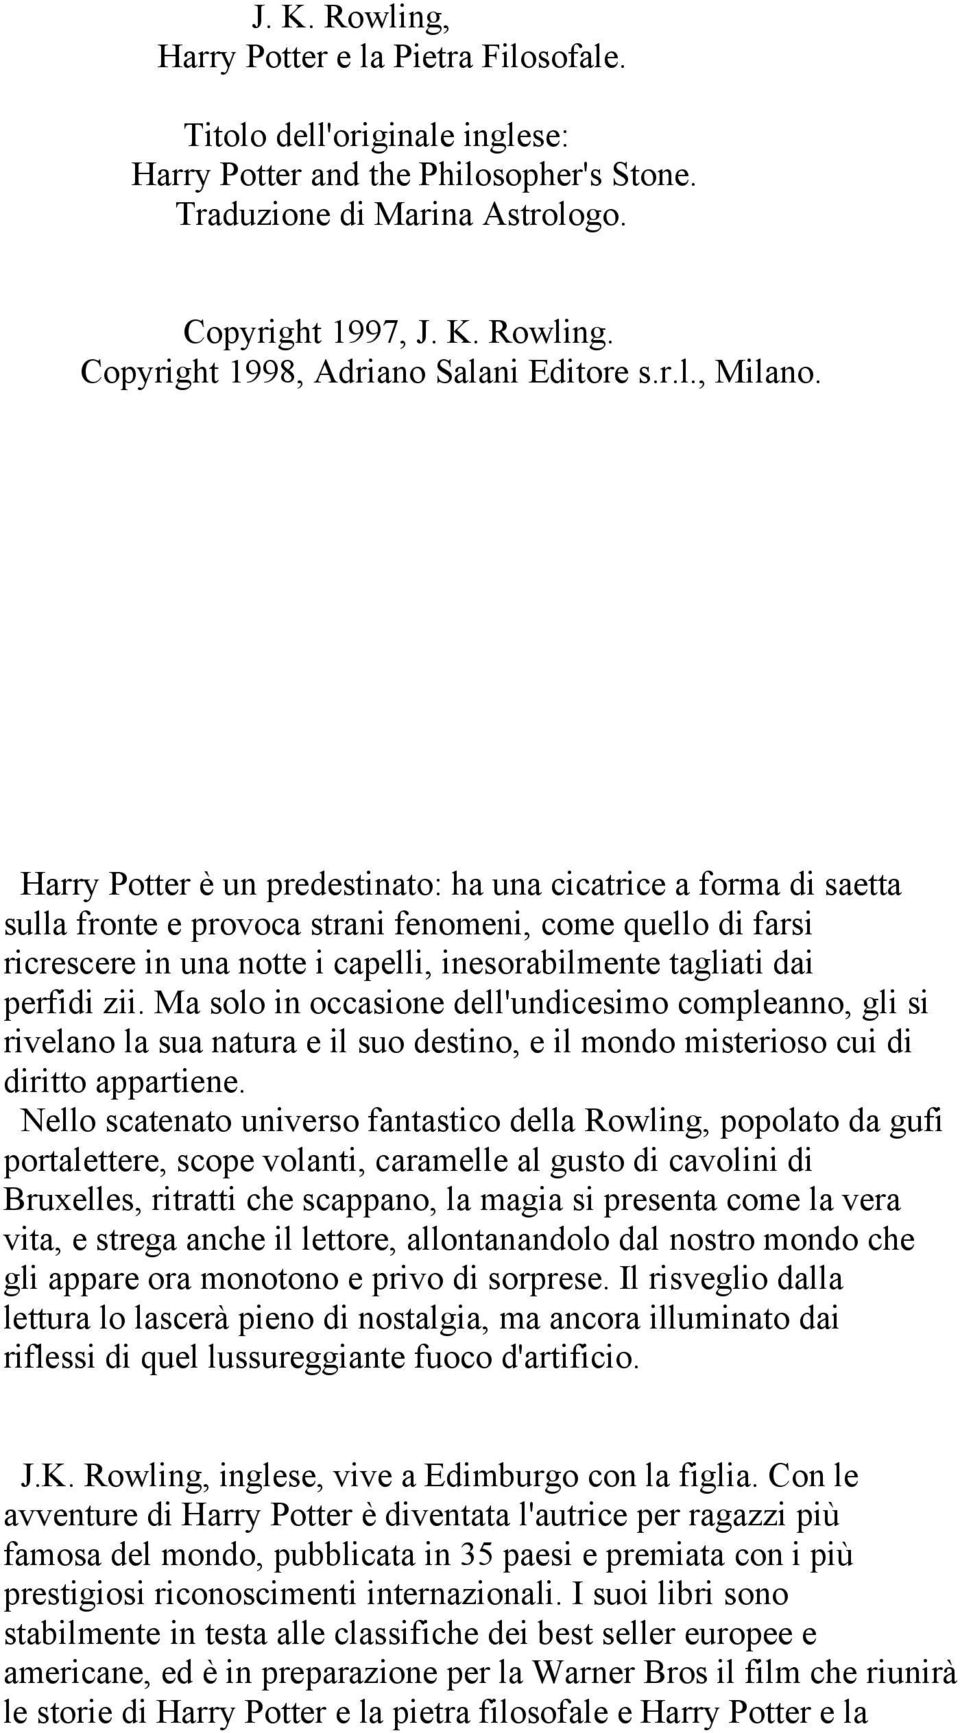 Harry potter italian